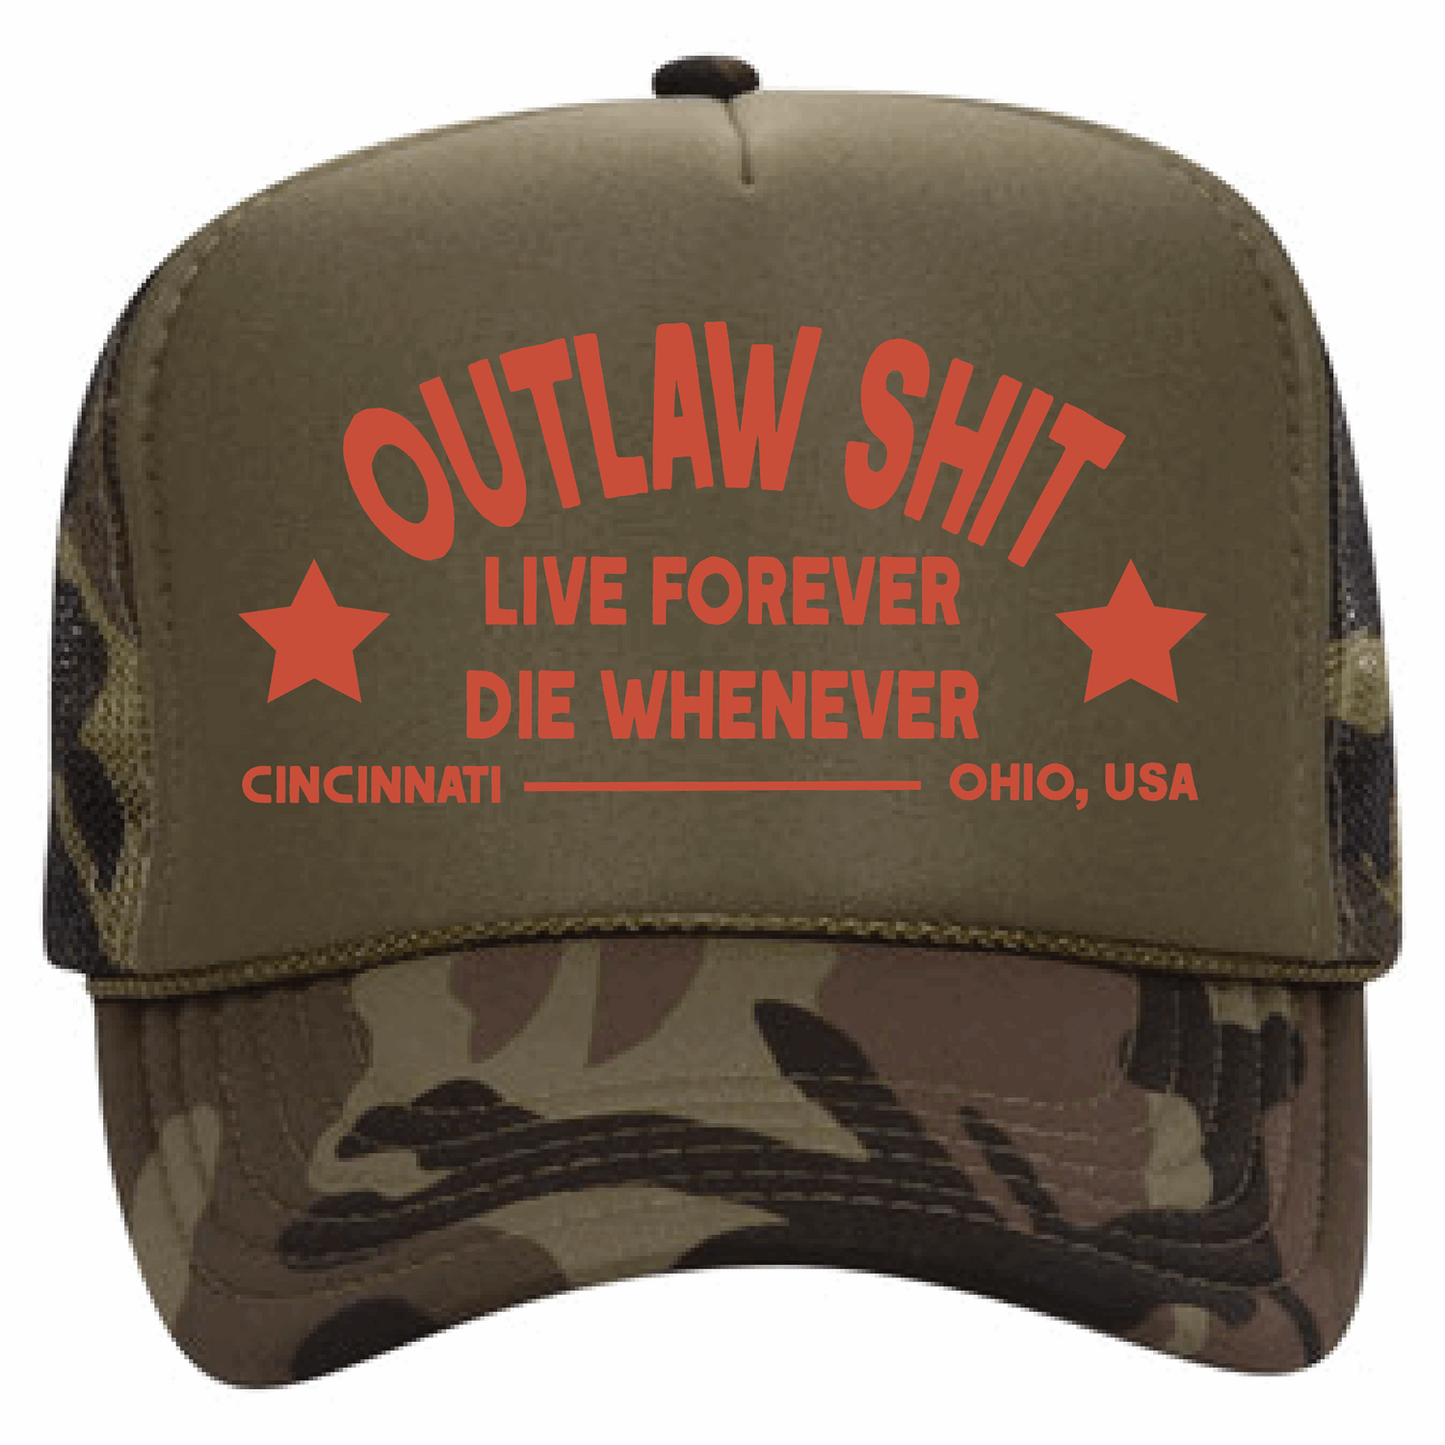 Outlaw Shit Trucker Hat